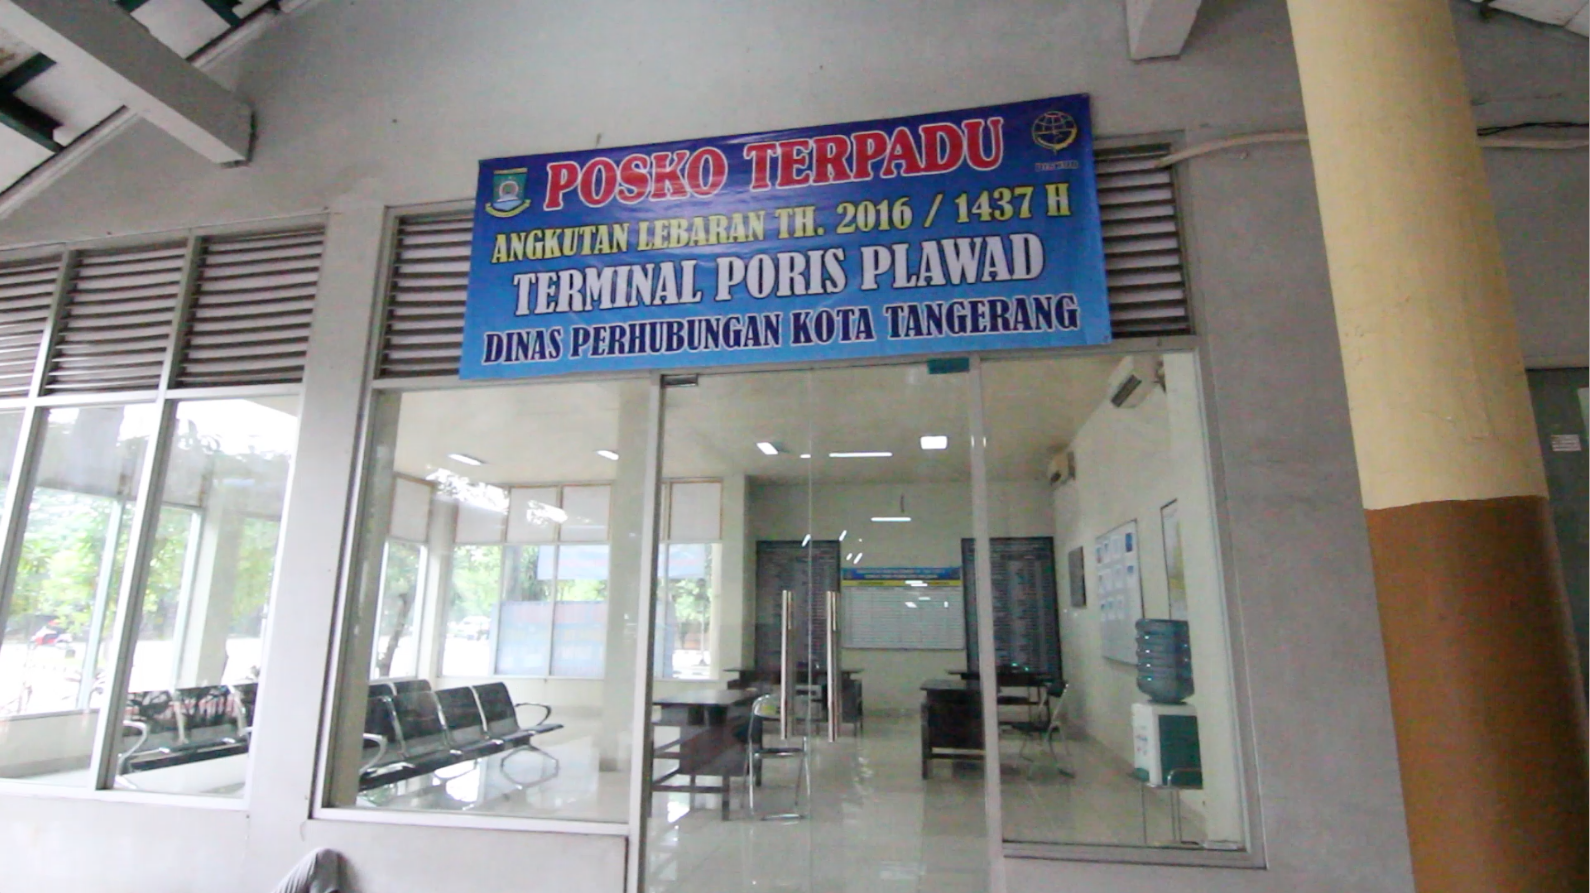 Posko mudik Lebaran tahun 2016 di Terminal Poris Plawad.(aul)